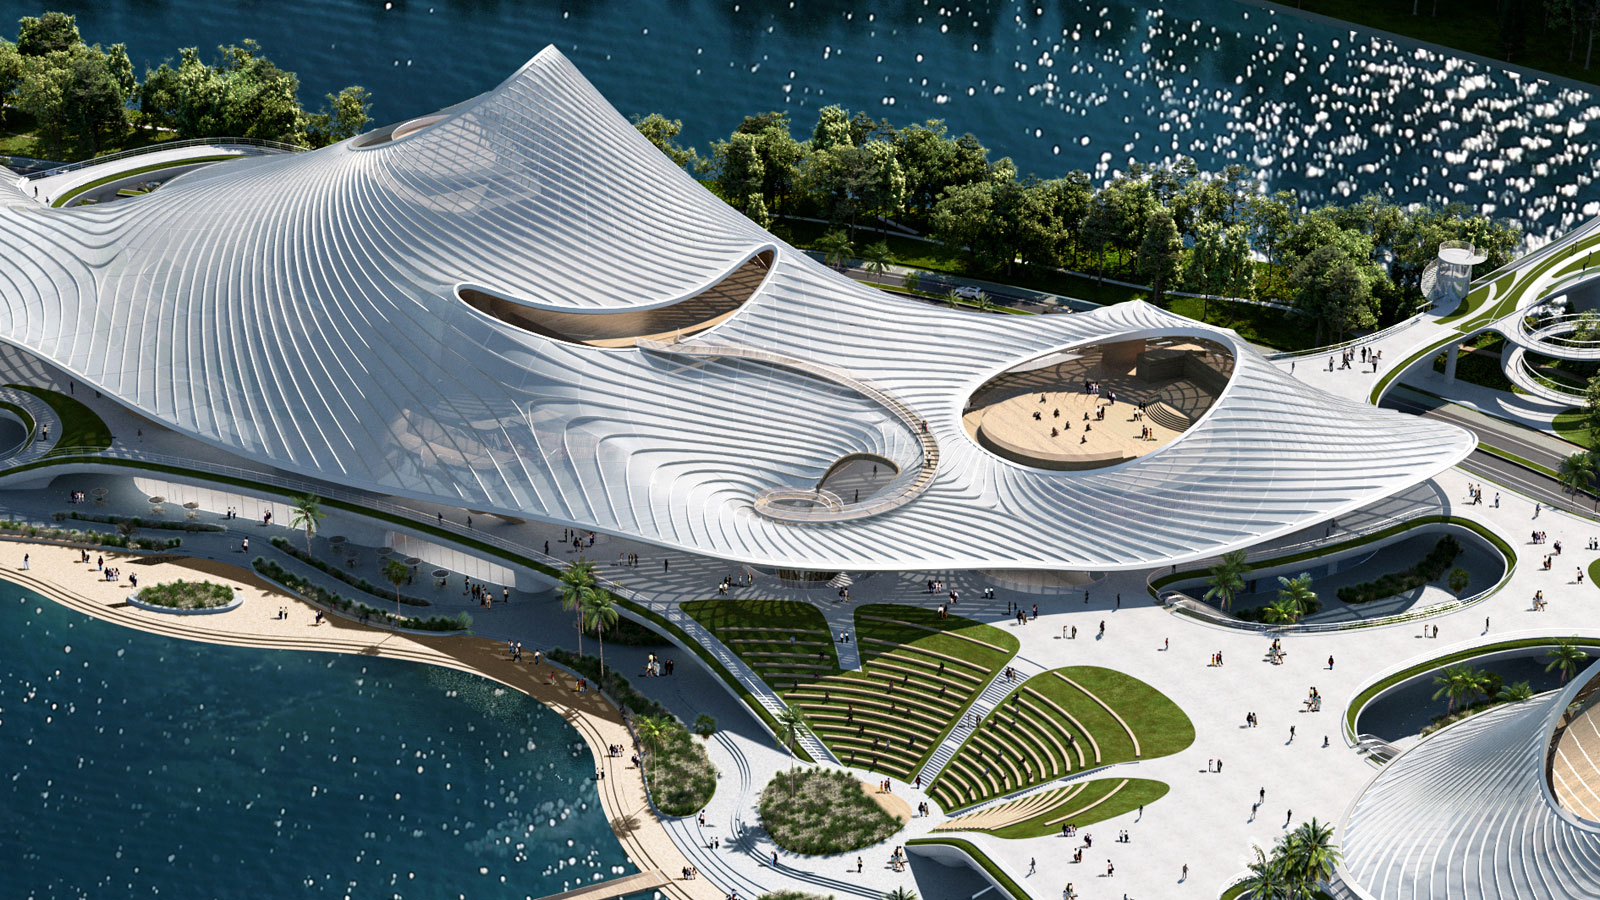 "Nanhai Art Centre MAD Architects indiaartndesign"